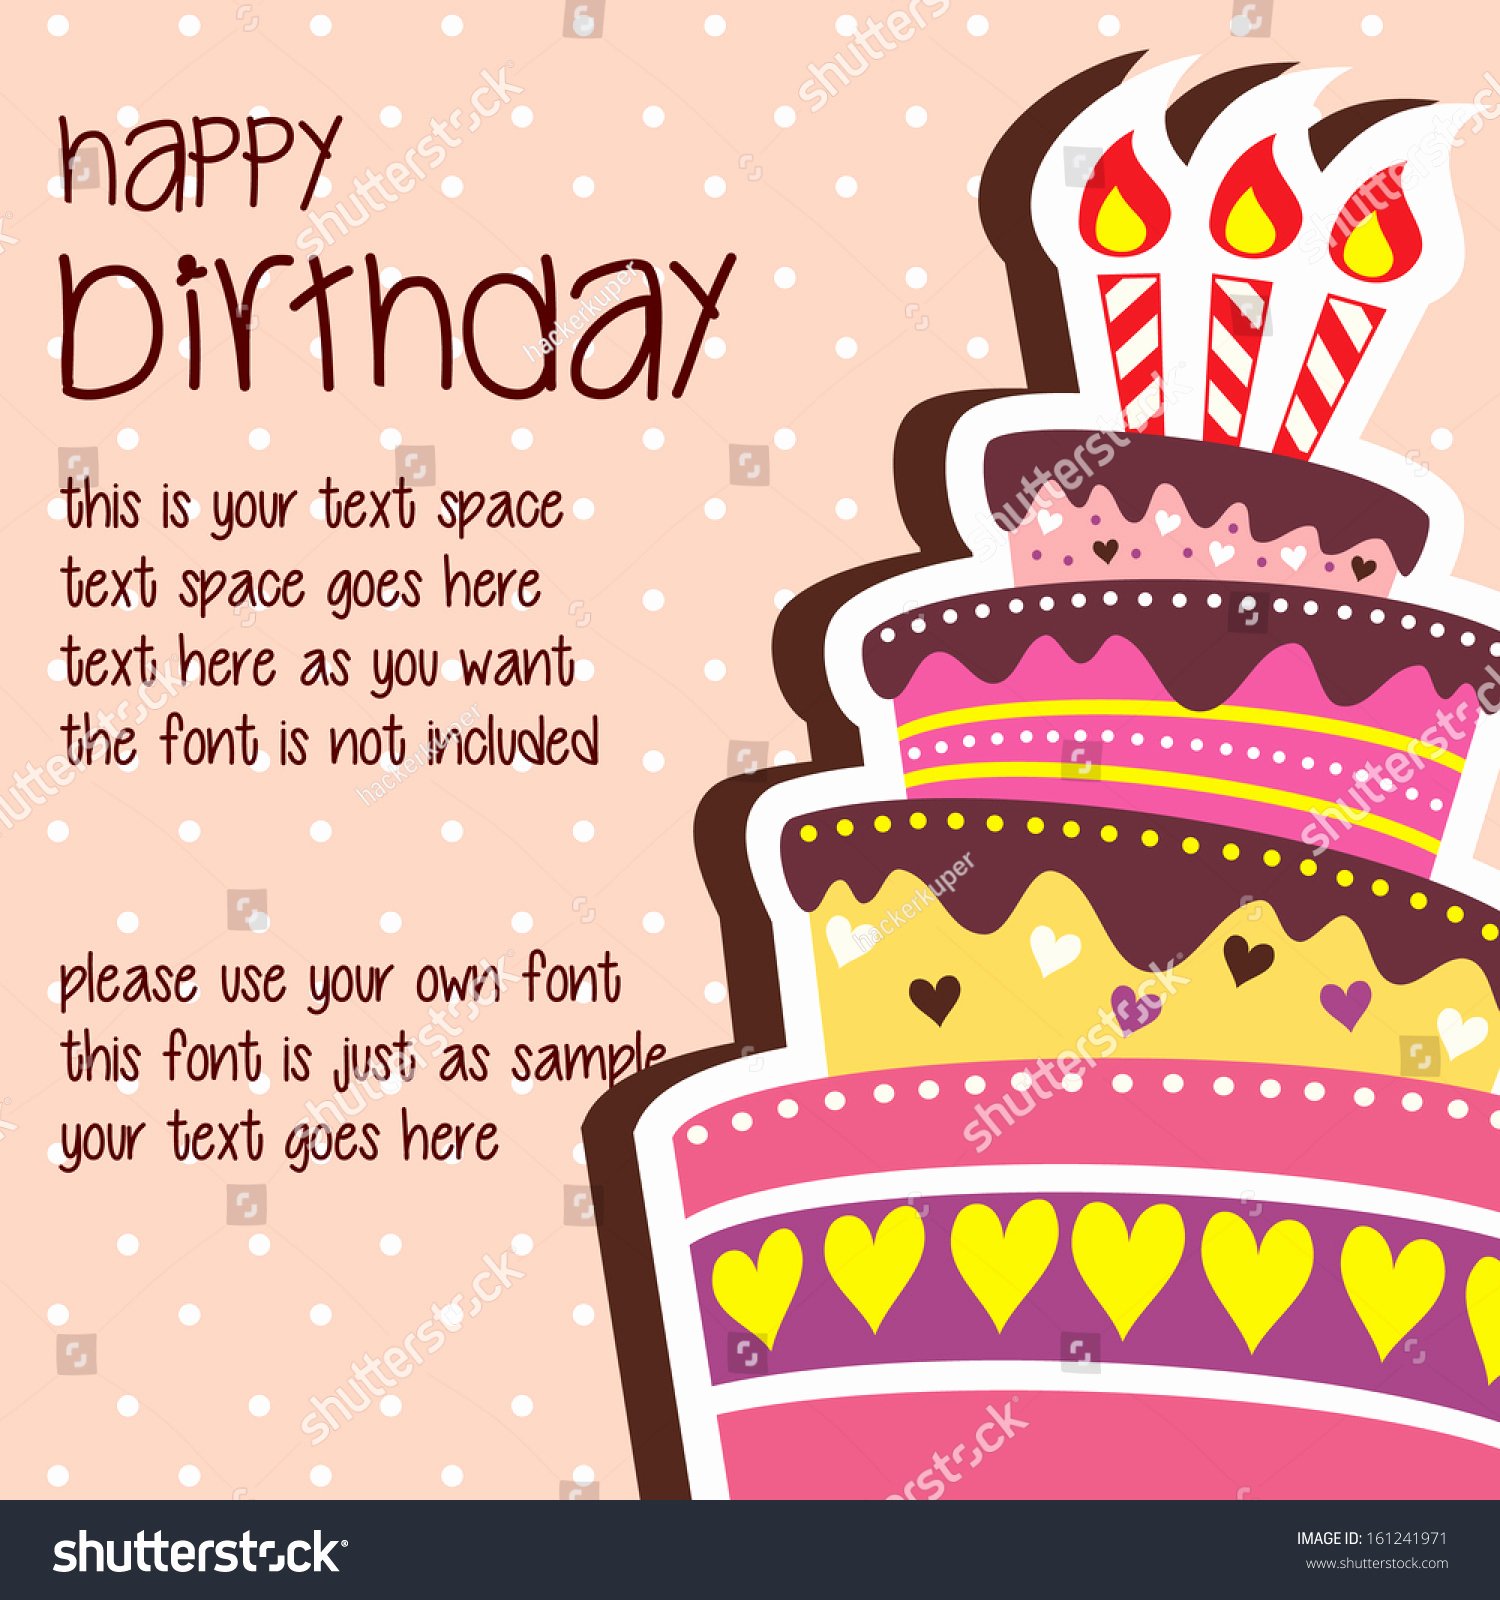 Happy Birthday Card Template Inspirational Birthday Card Template